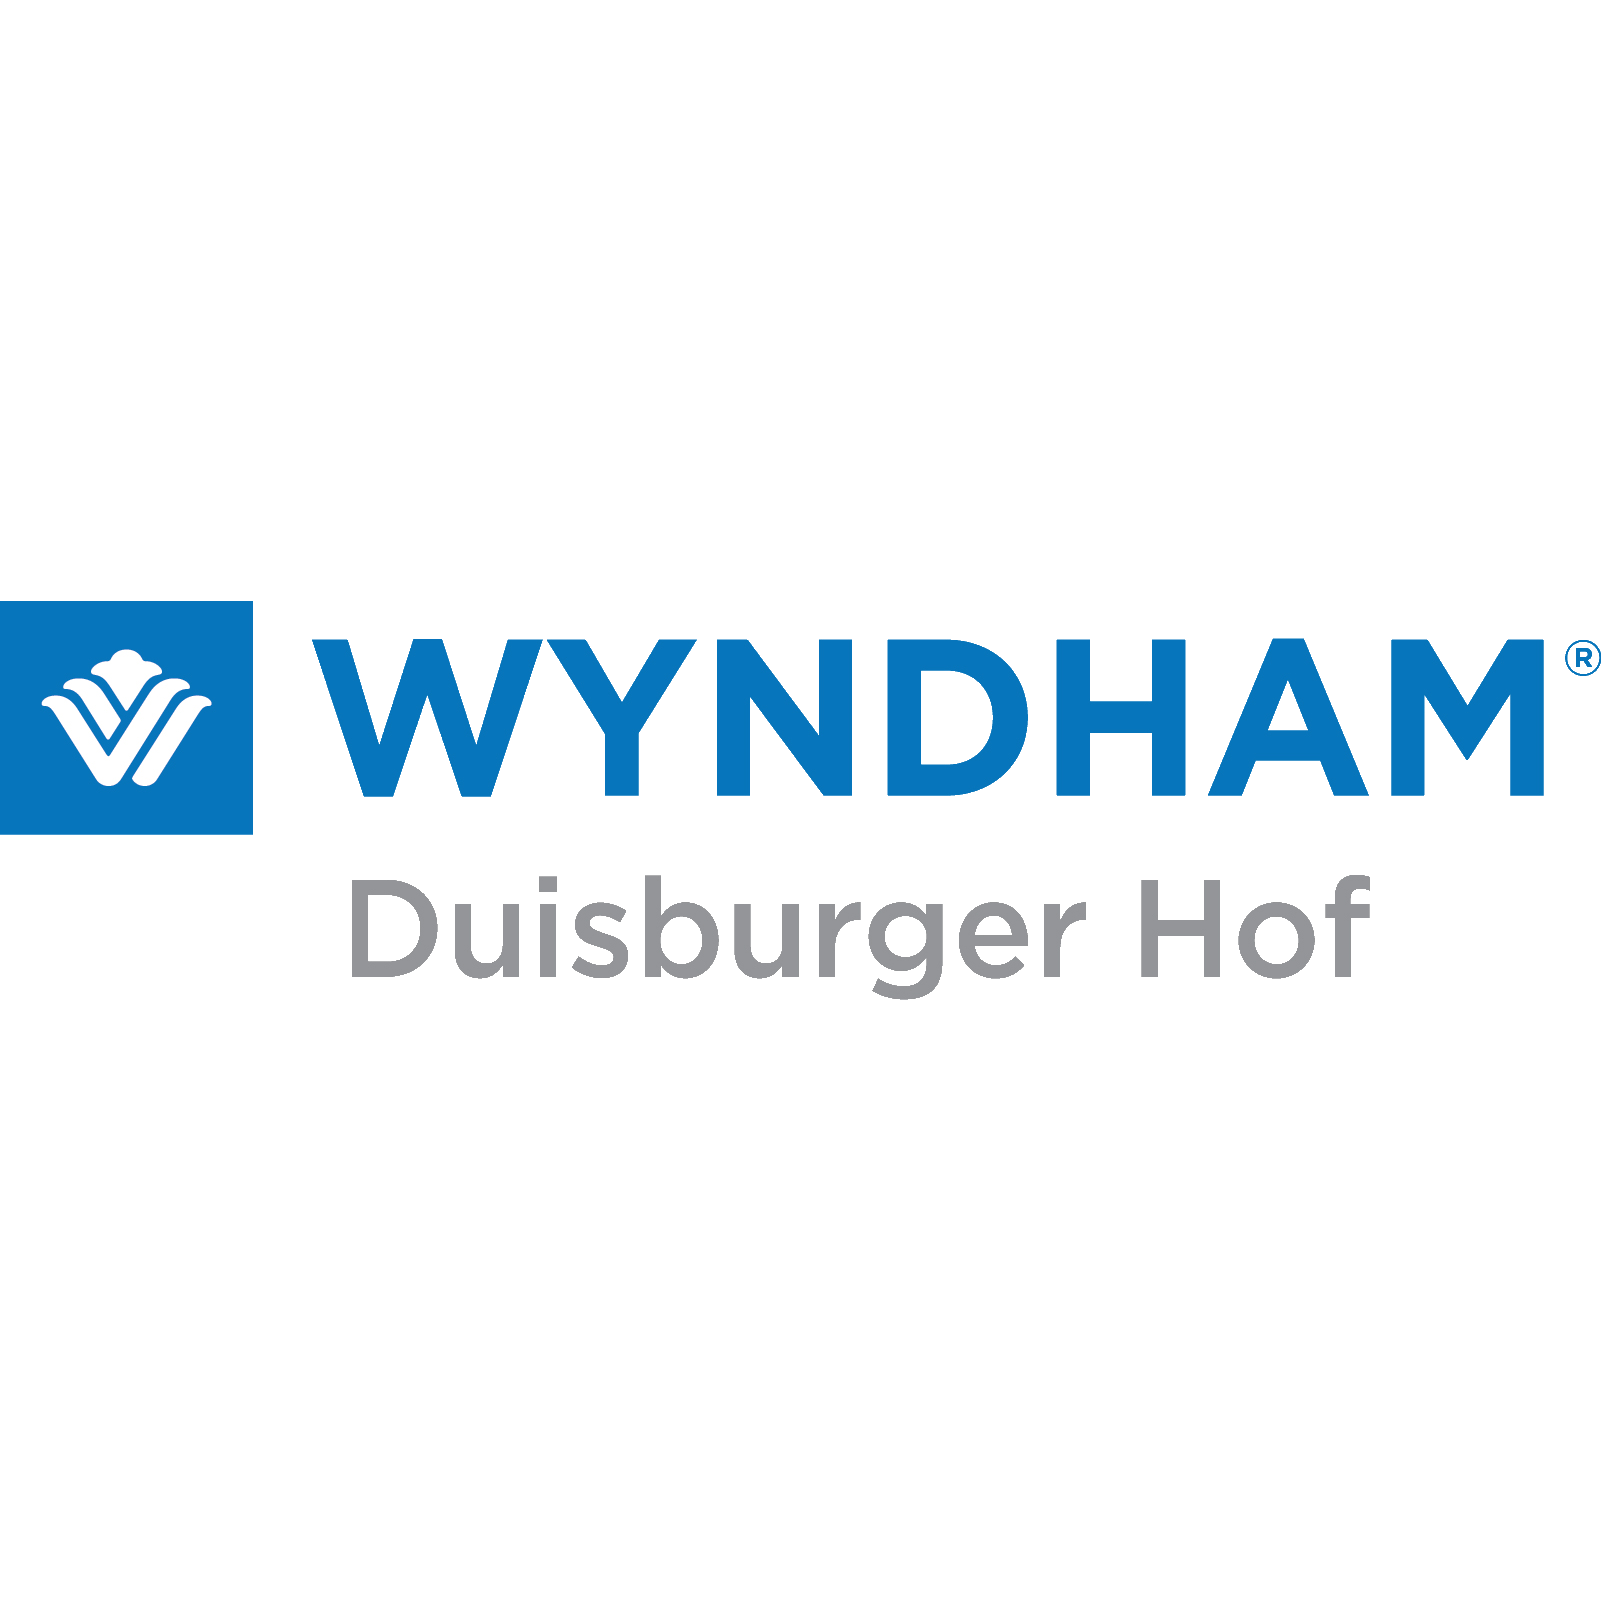 Wyndham Duisburger Hof